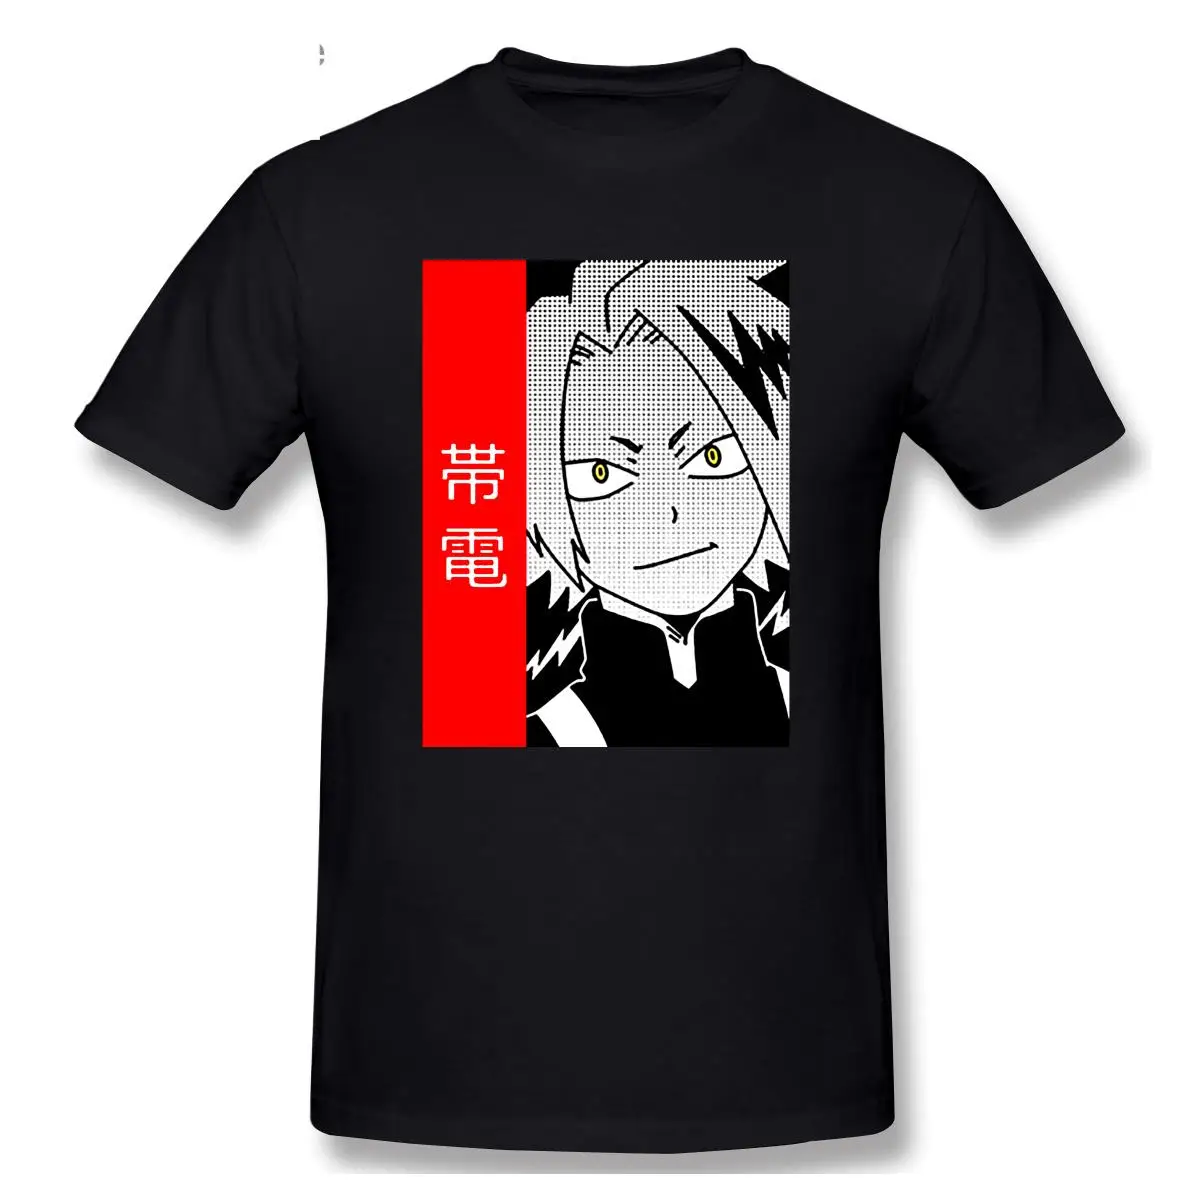 

Plain Boku No Hero Academia Inspired Shirt - Kaminari Denki Shirt - My Hero Academy Anime Manga - BNHA Anime Shirt